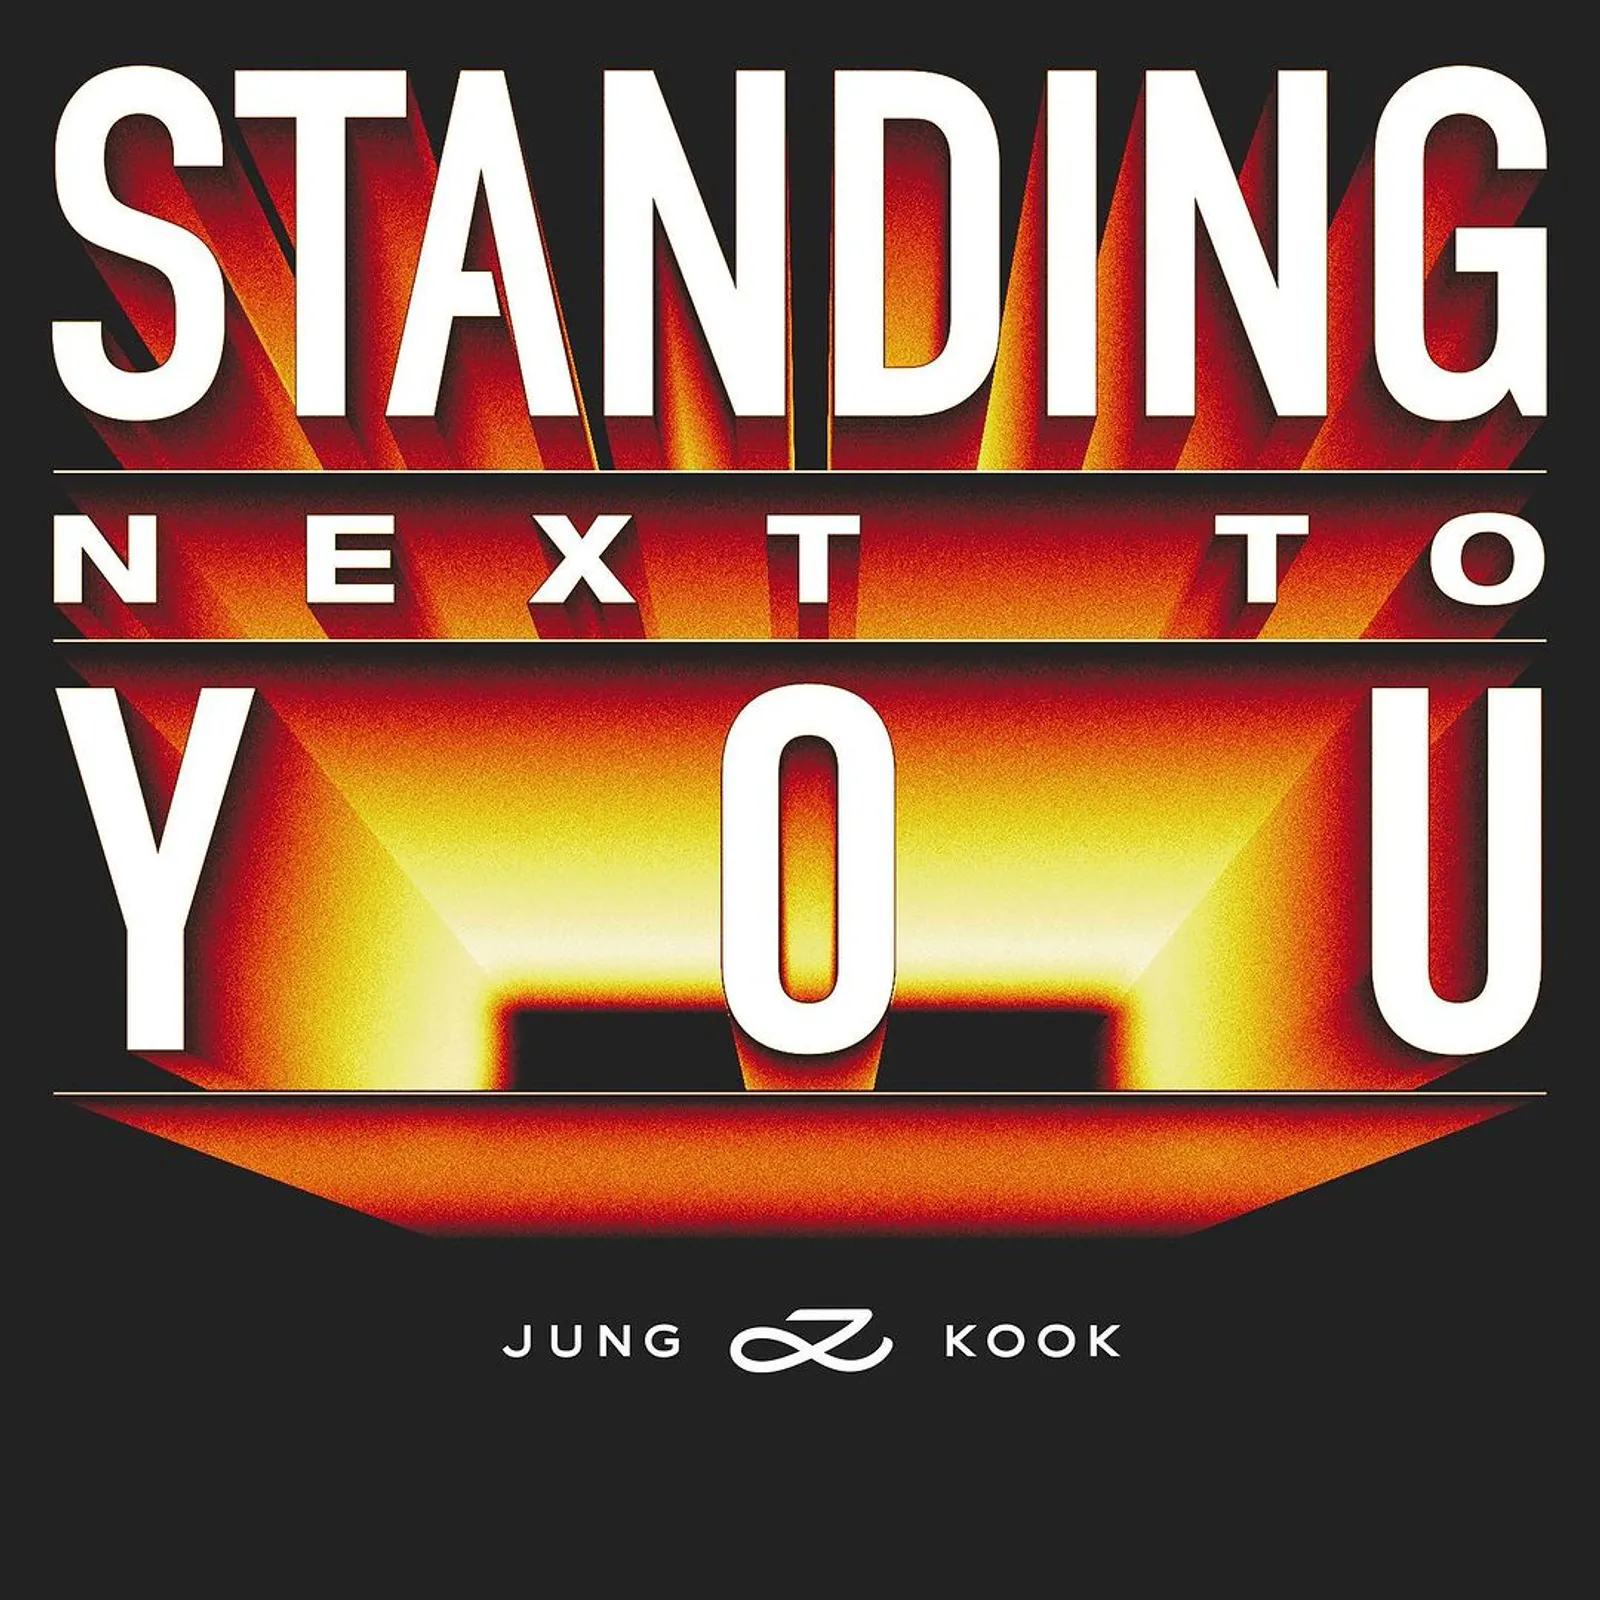 Lirik Lagu Remix “Standing Next To You” - Jungkook Feat Usher